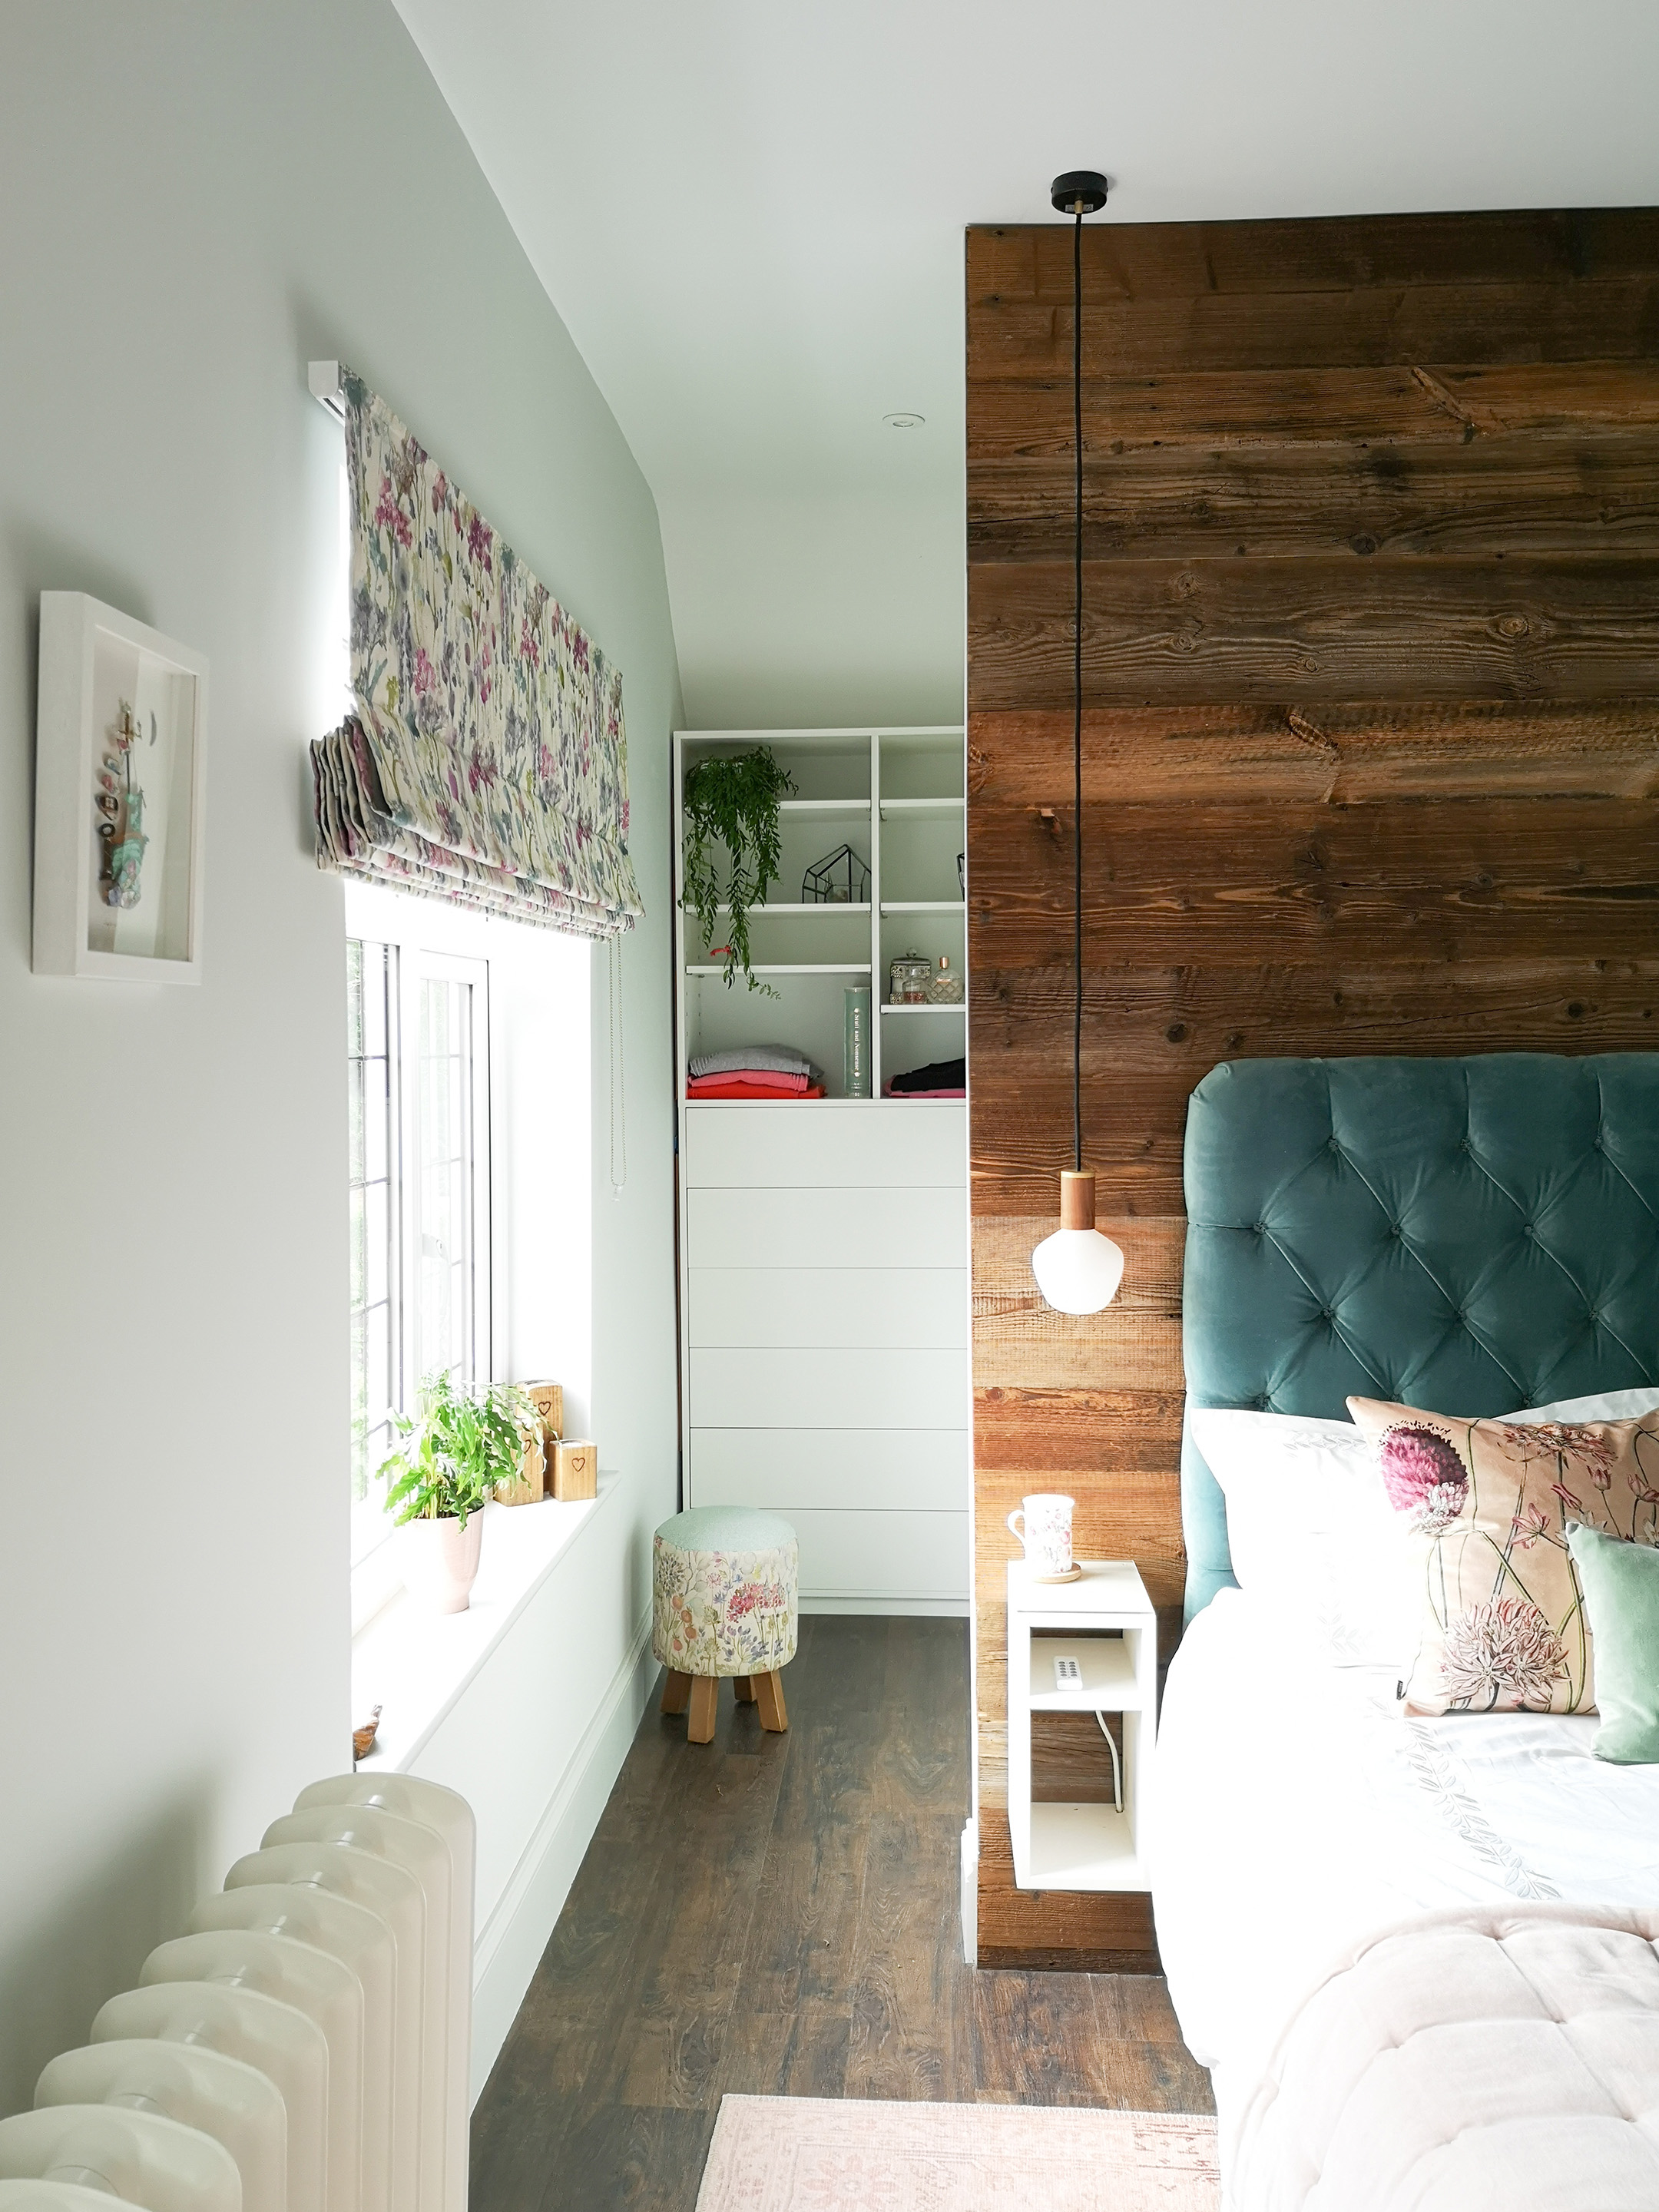 Rustic reclaimed wood headboard bedroom interior design solihull